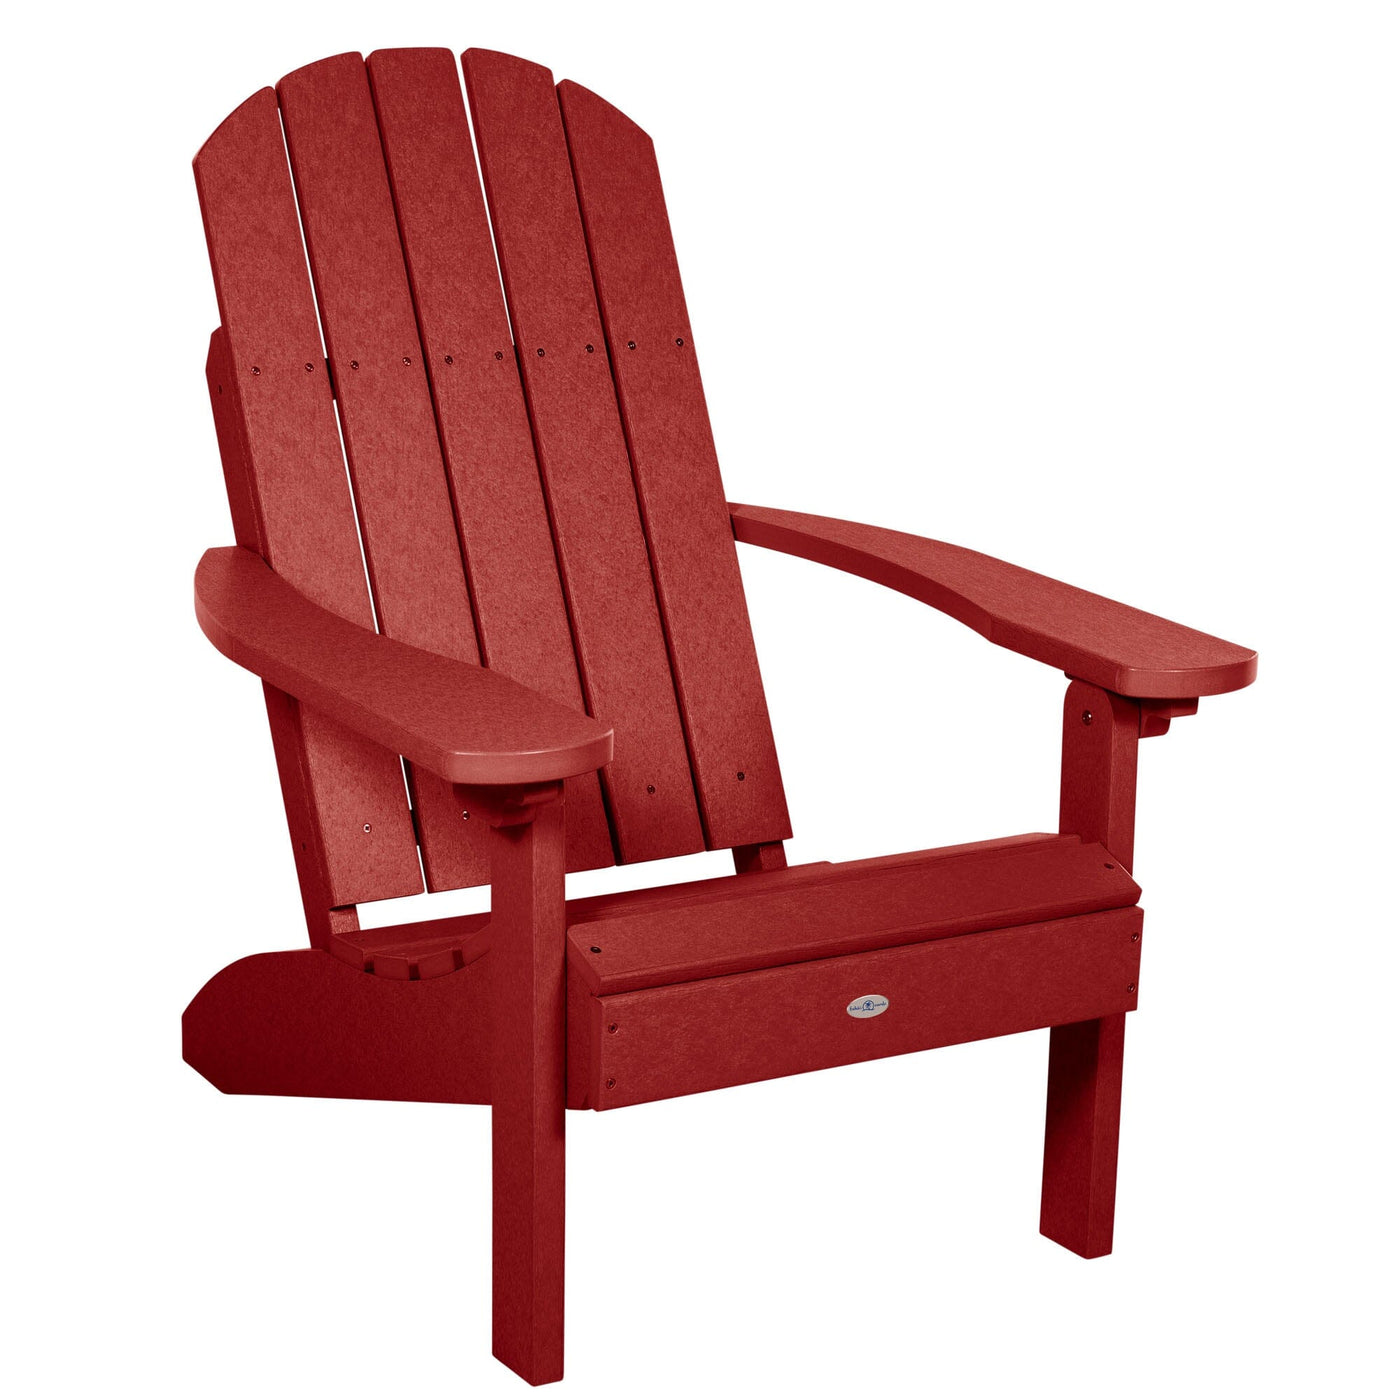 Cape Classic Adirondack Chair Adirondack Chairs Bahia Verde Outdoors Boathouse Red 